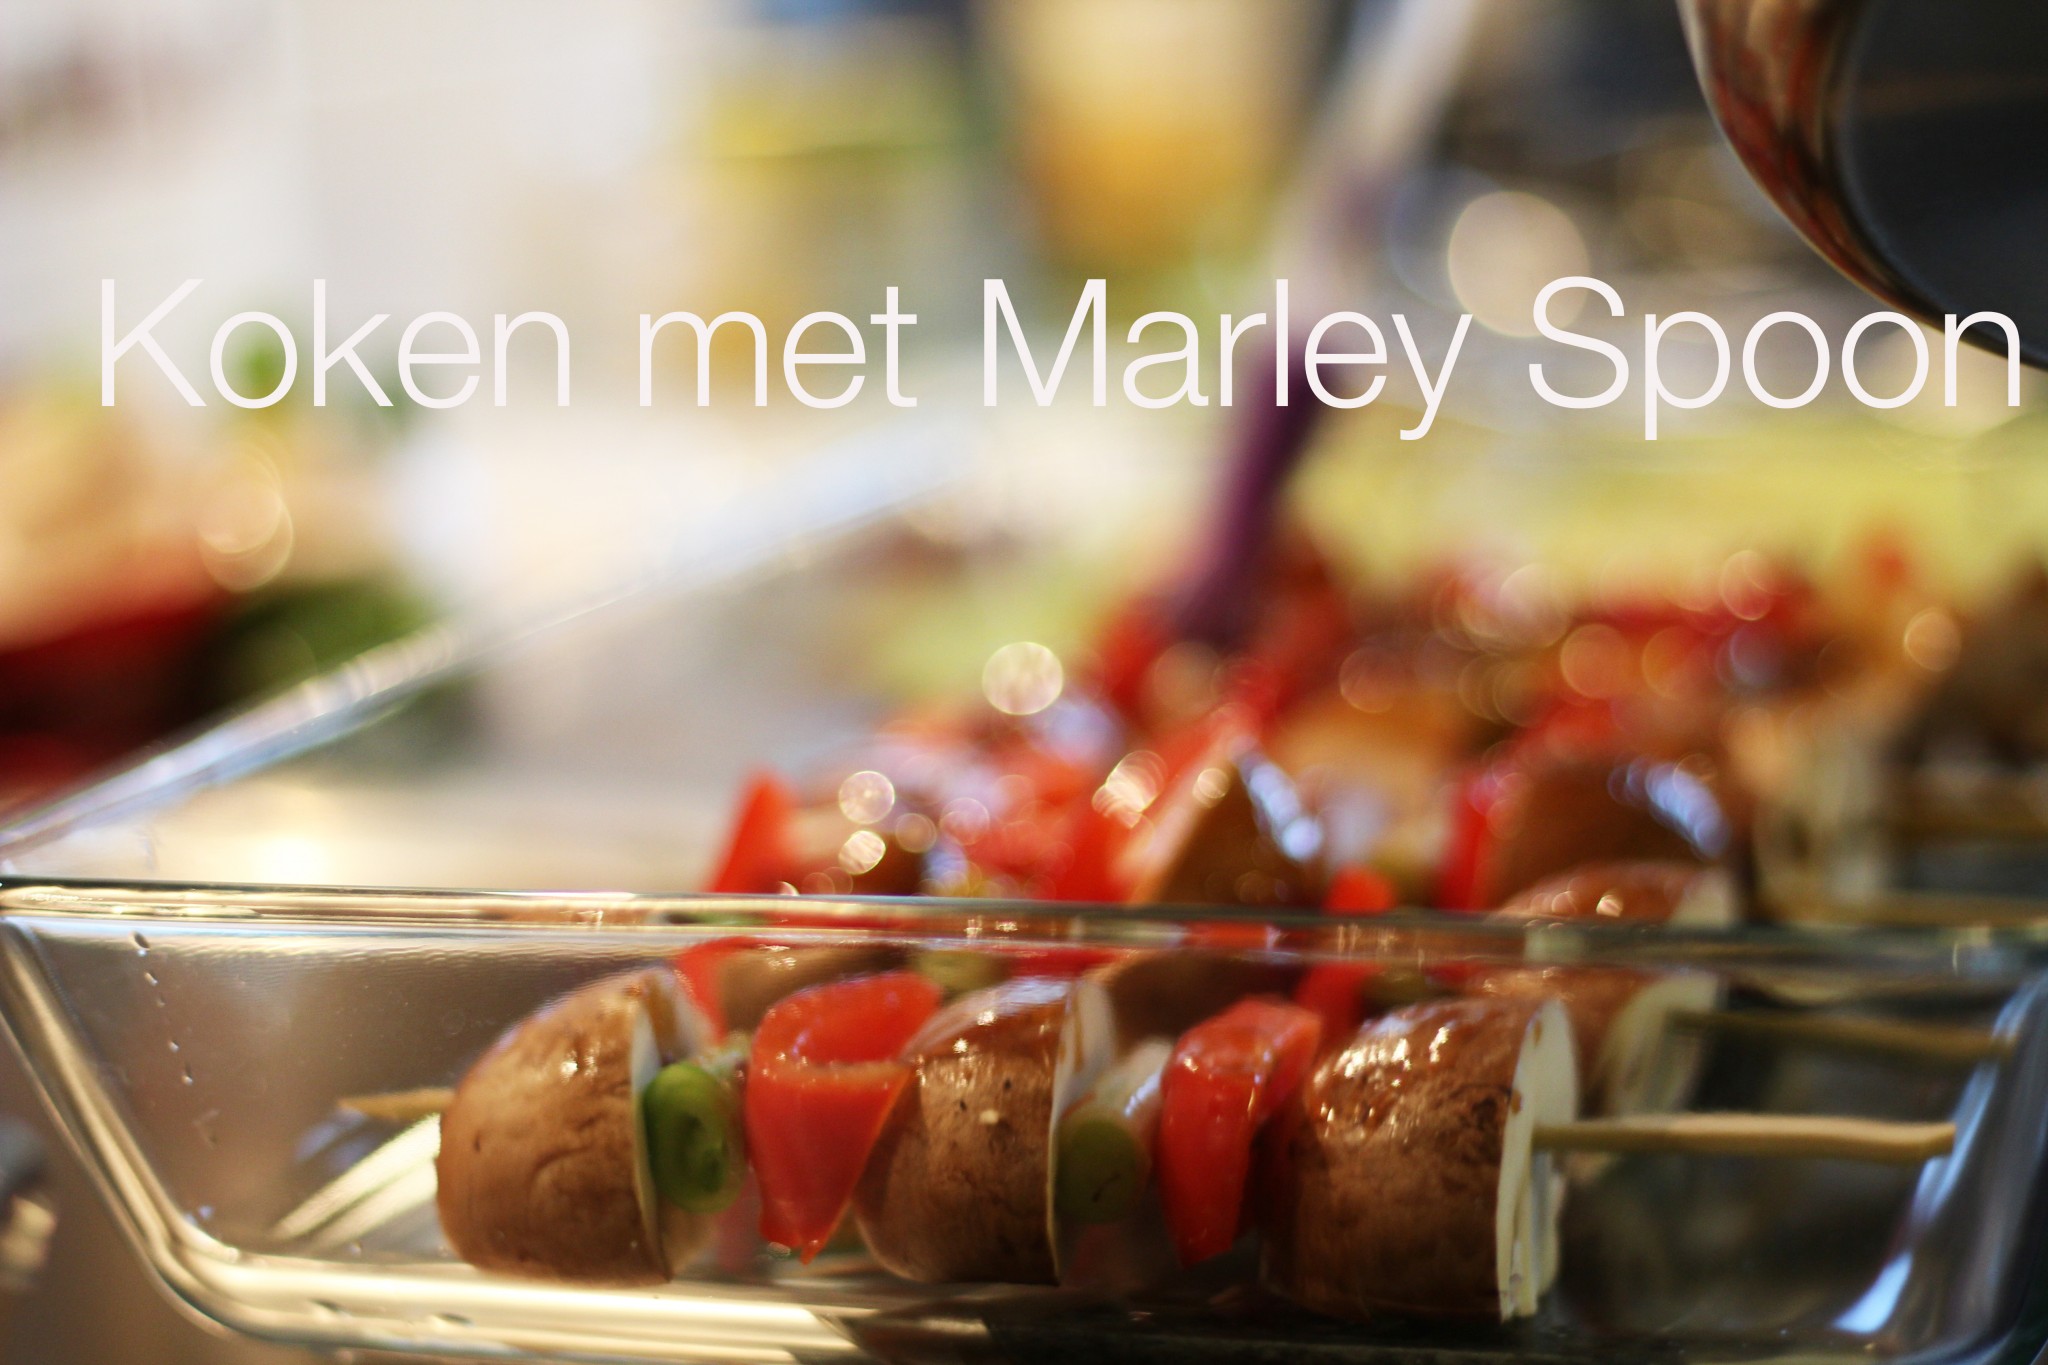 Koken met Marley Spoon